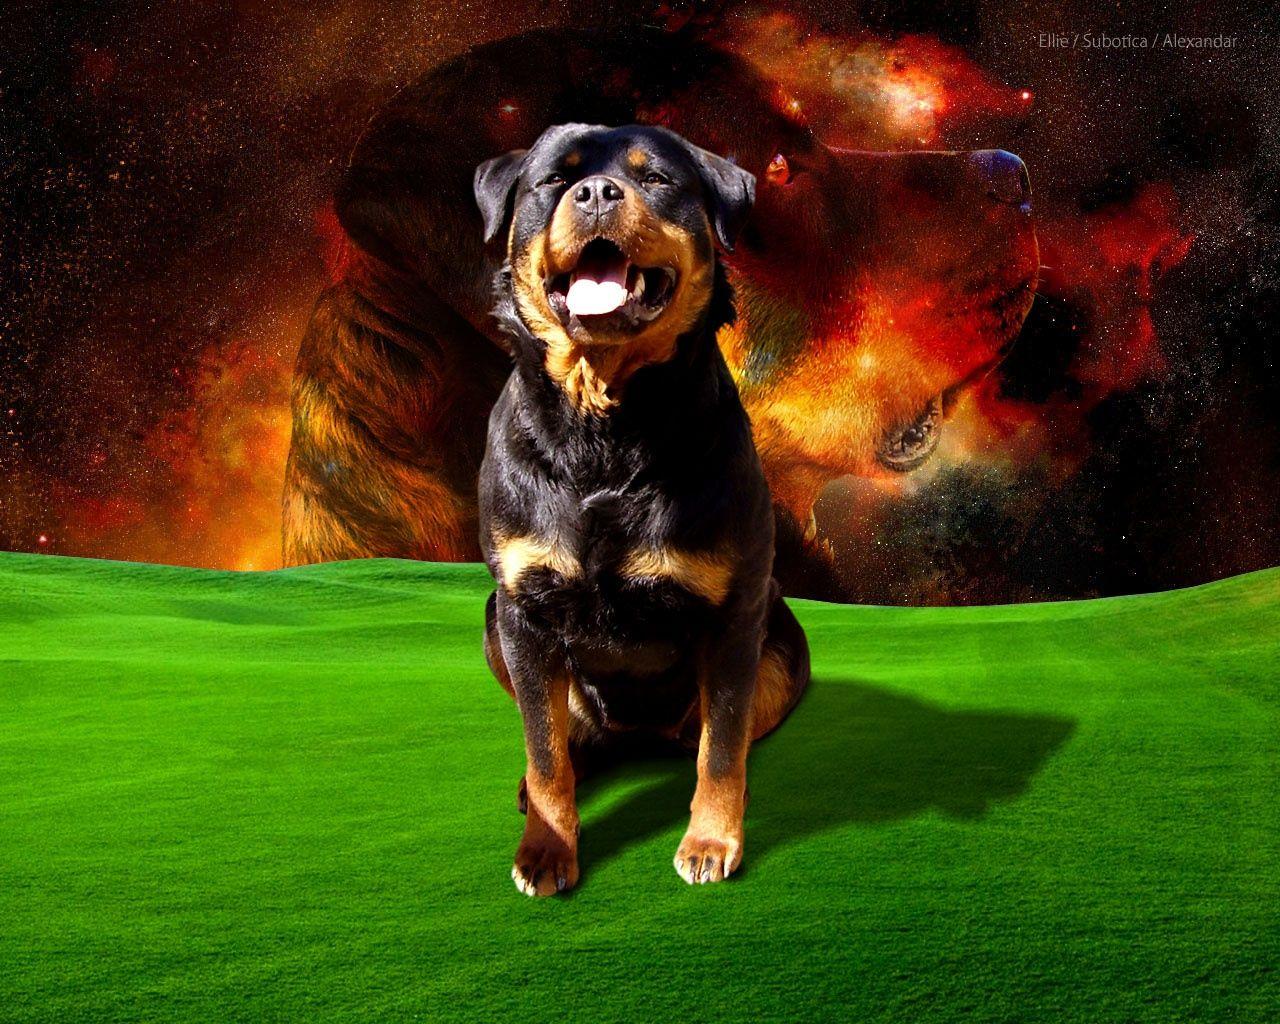 V.281: Rottweiler Dogs Wallpaper, HD Image of Rottweiler Dogs